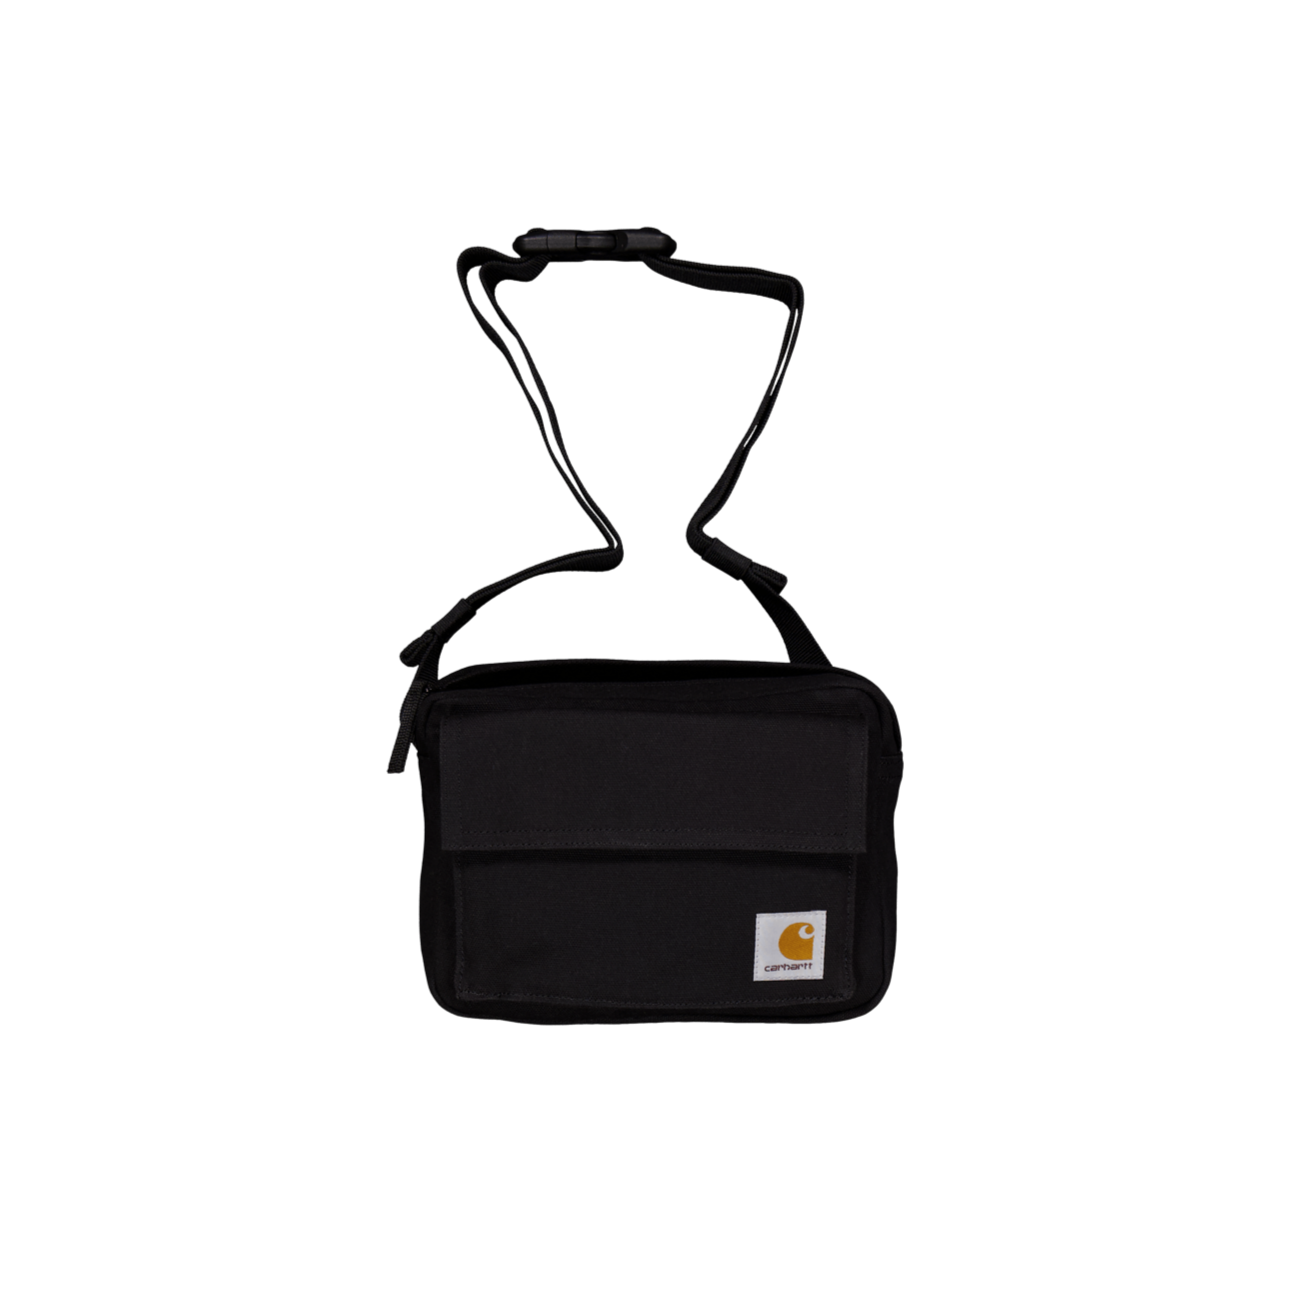 Carhartt WIP Dawn Belt Bag | Black